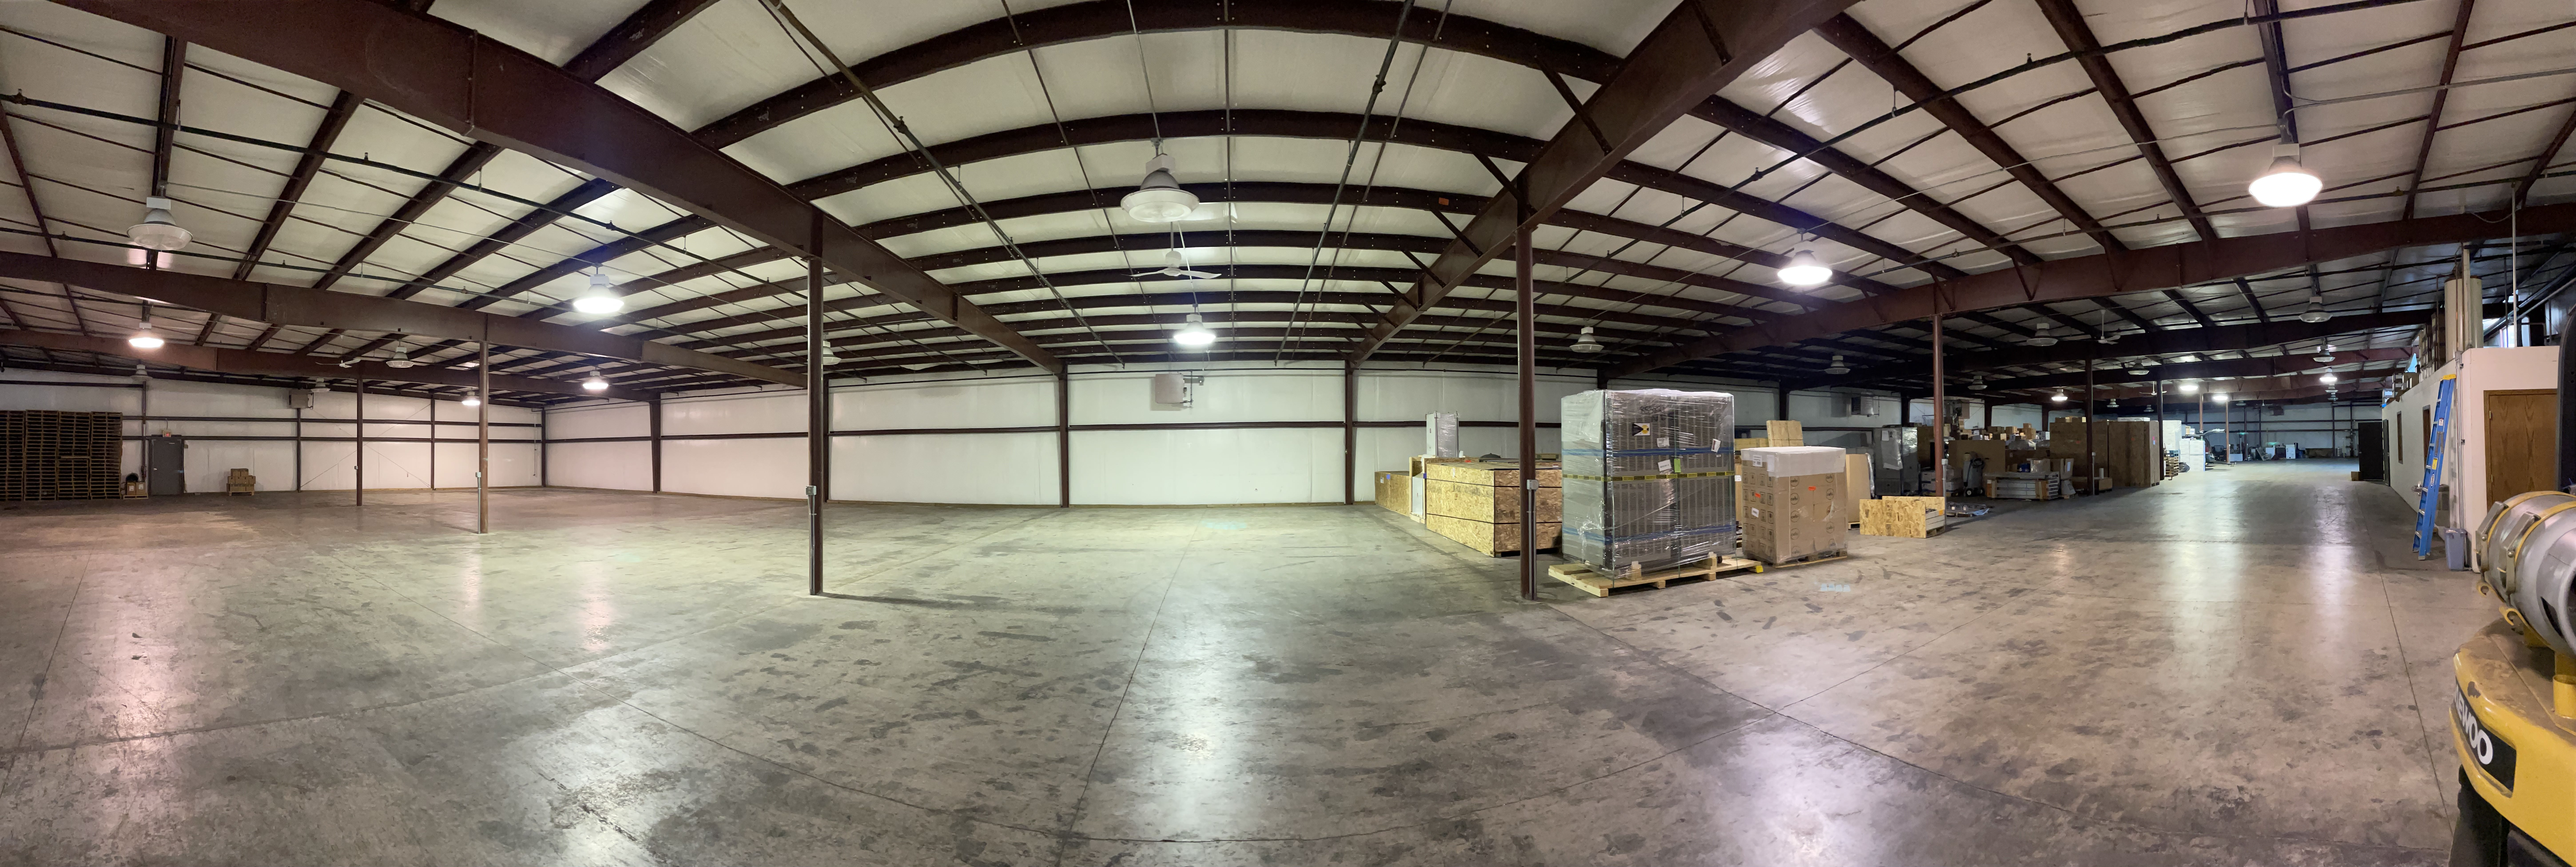 RL Hess Warehouse Storage